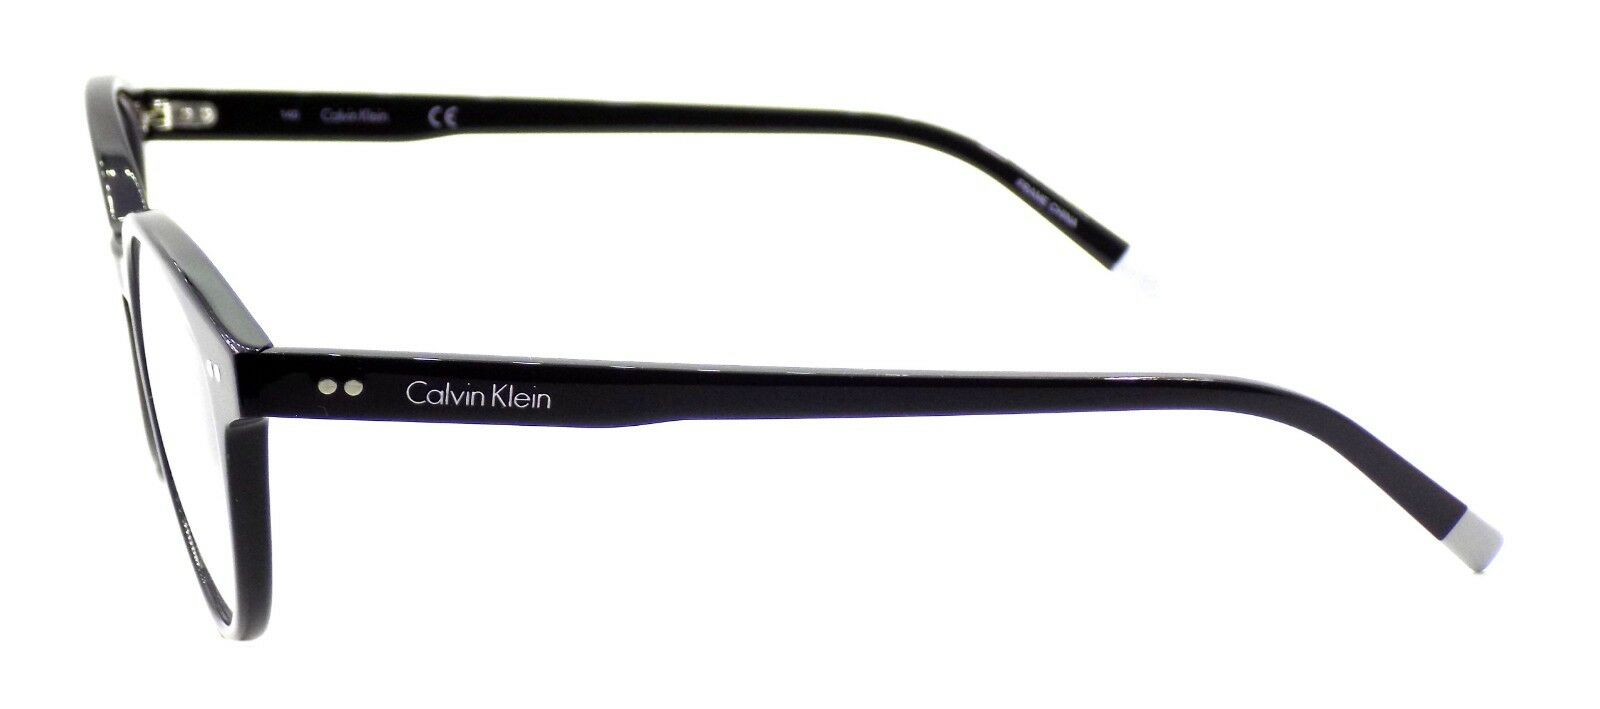 3-Calvin Klein CK5991 001 Women's Eyeglasses Frames Black 52-18-140 + CASE-750779117460-IKSpecs